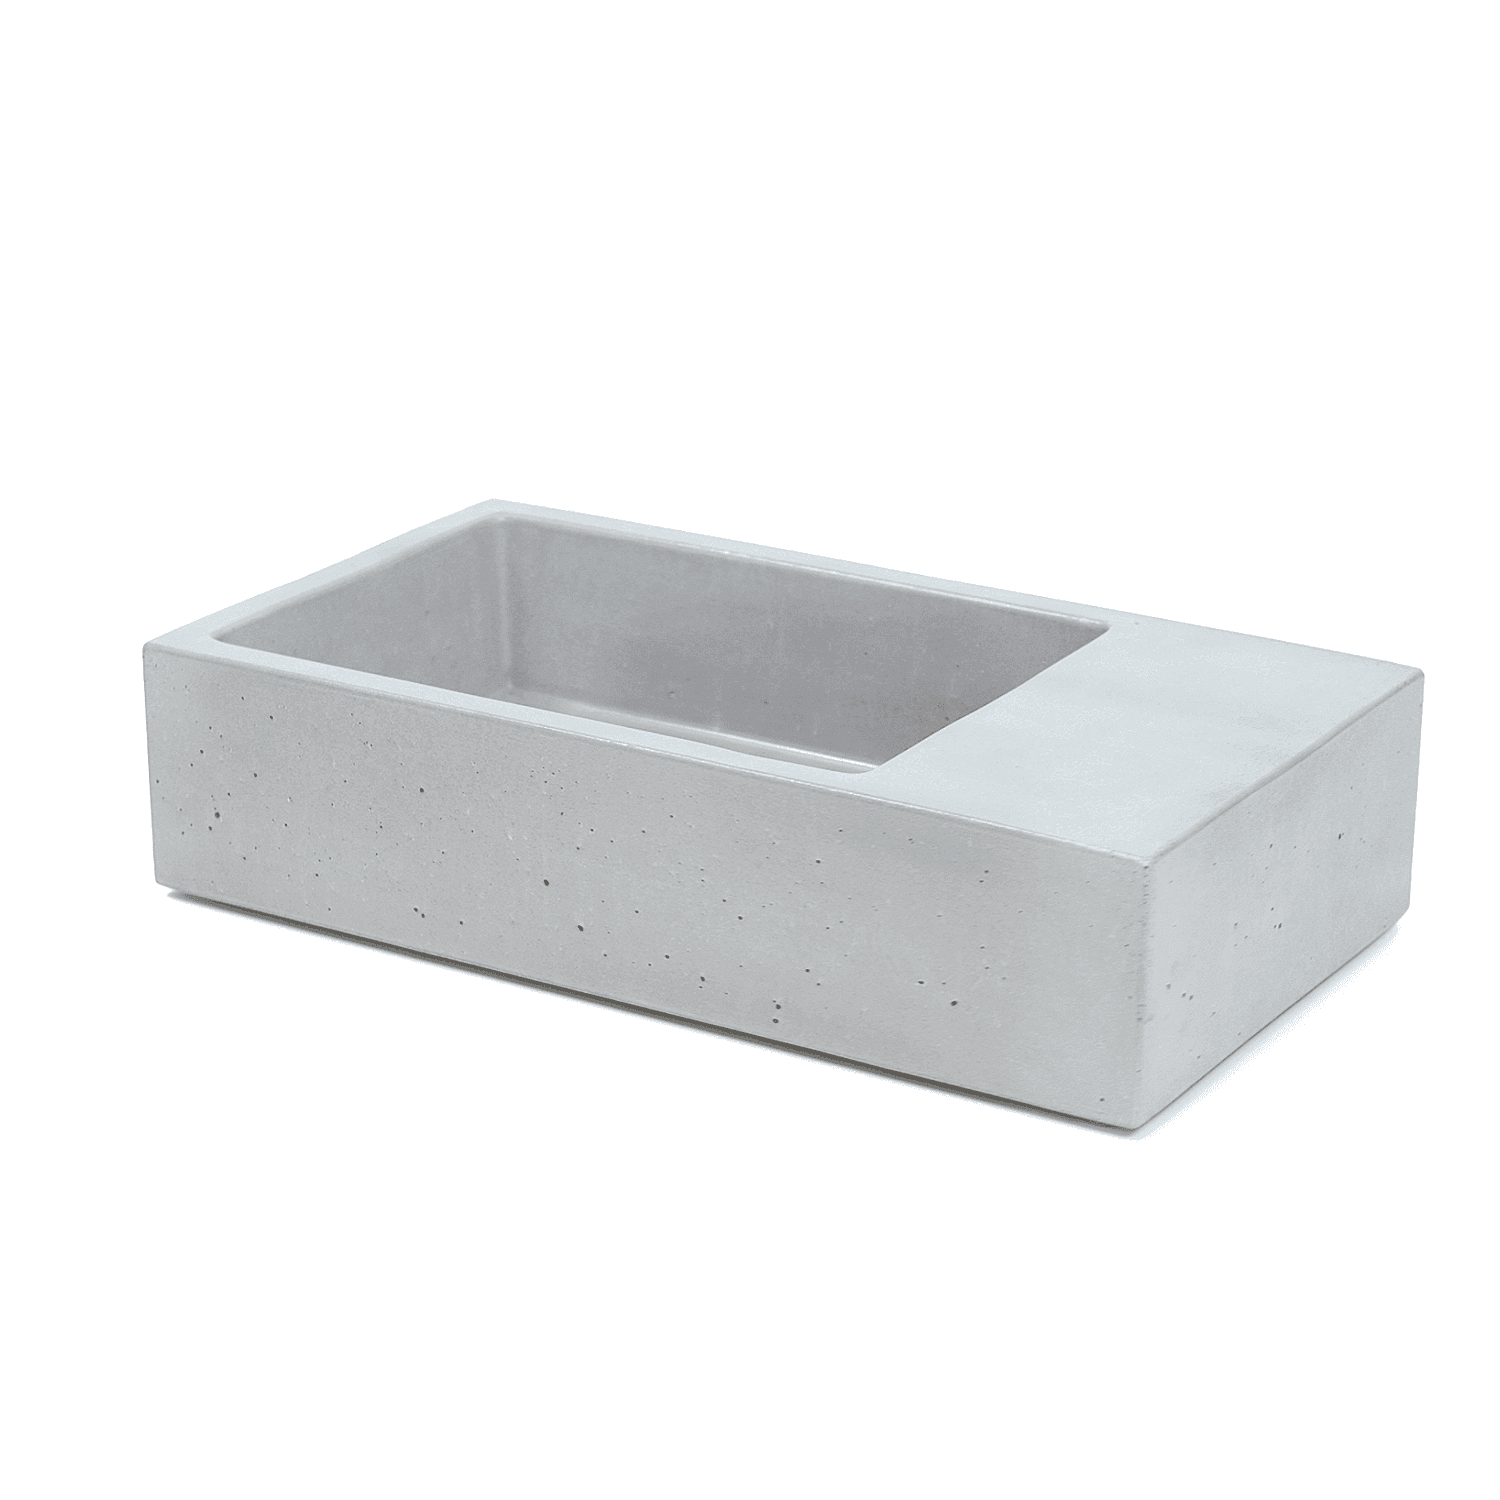 New Form Concrete Powder Room Petite Vessel Basin 435mm X 240mm X 110mm - Burdens Plumbing